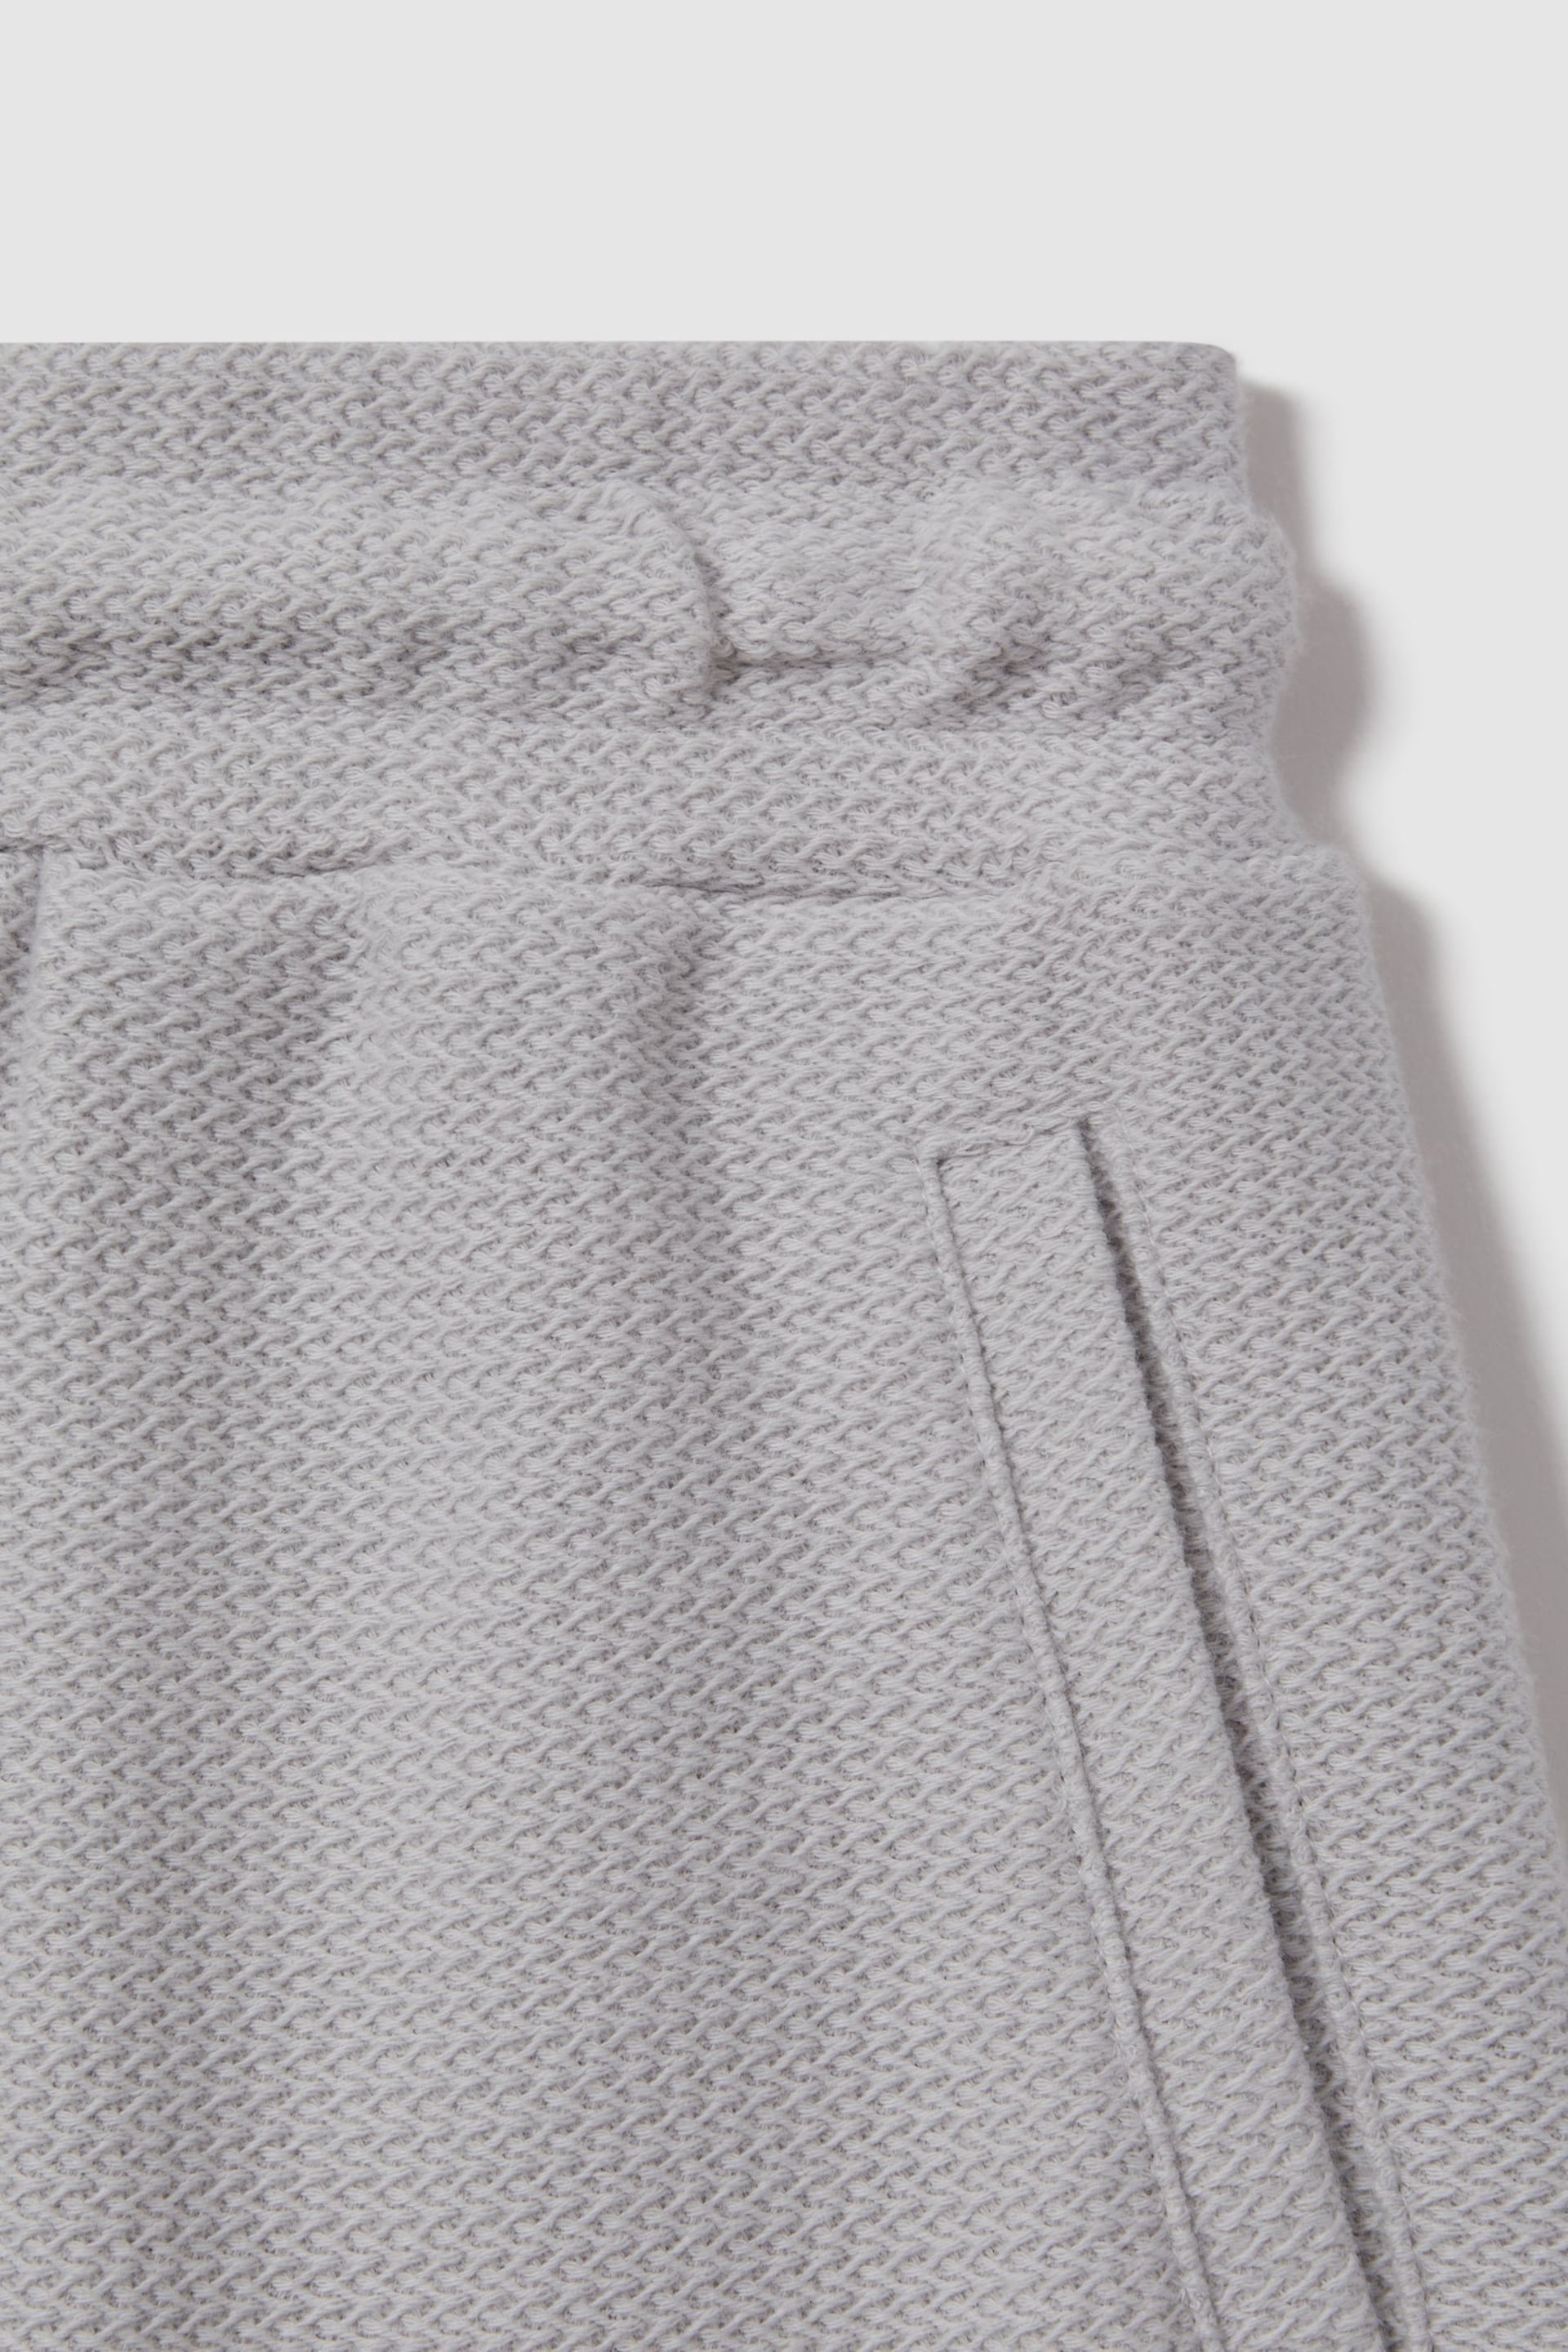 Reiss Silver Hester Senior Textured Cotton Drawstring Shorts - Image 3 of 3